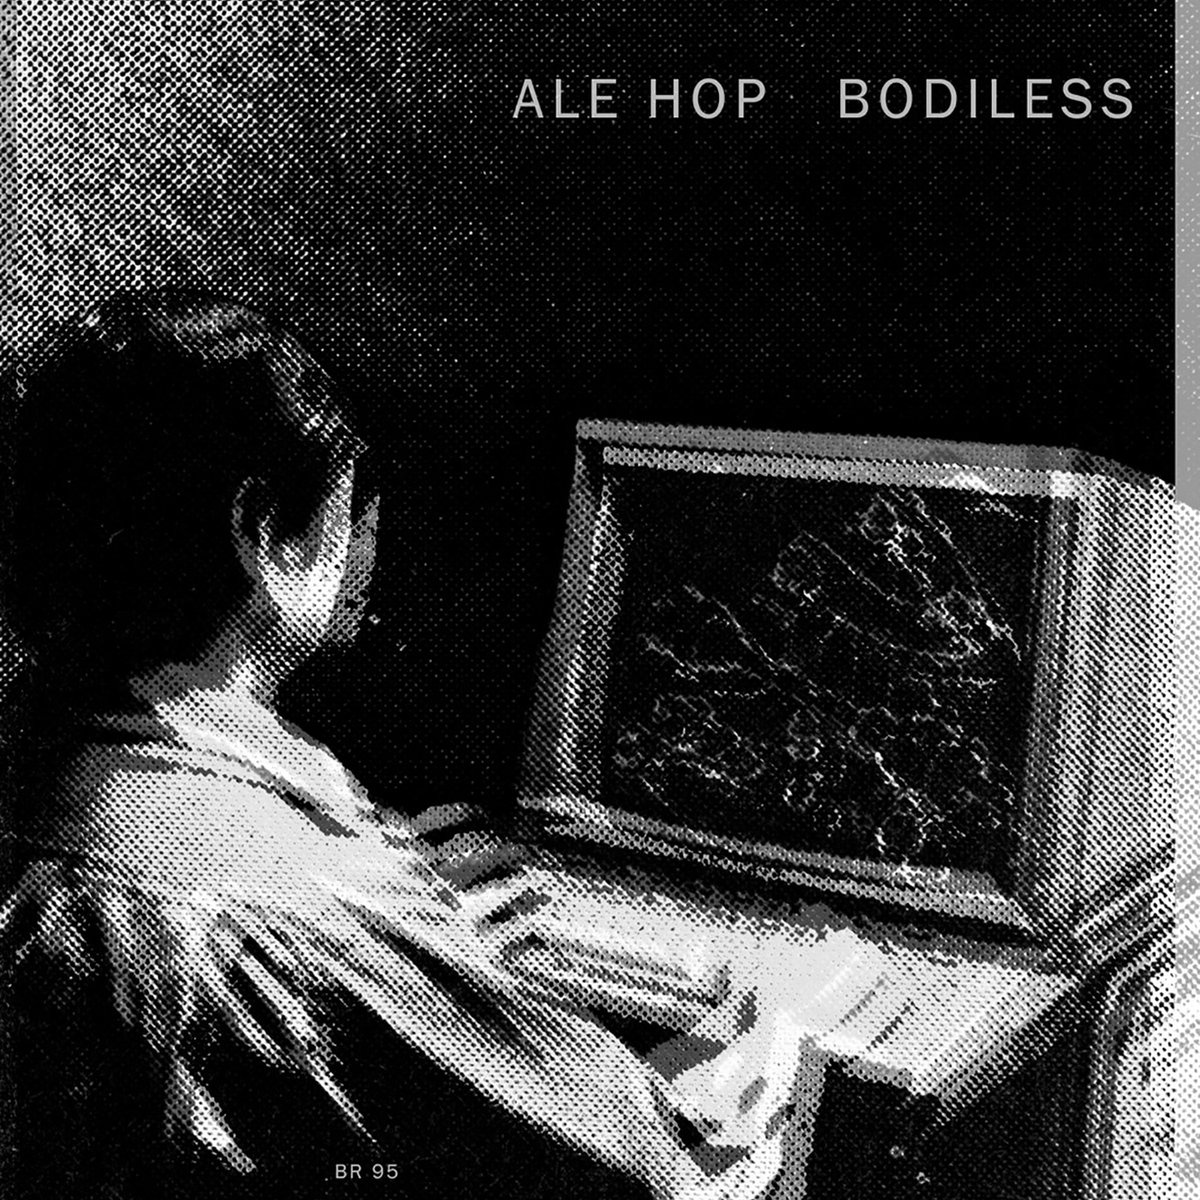 Ale Hop — Bodiless